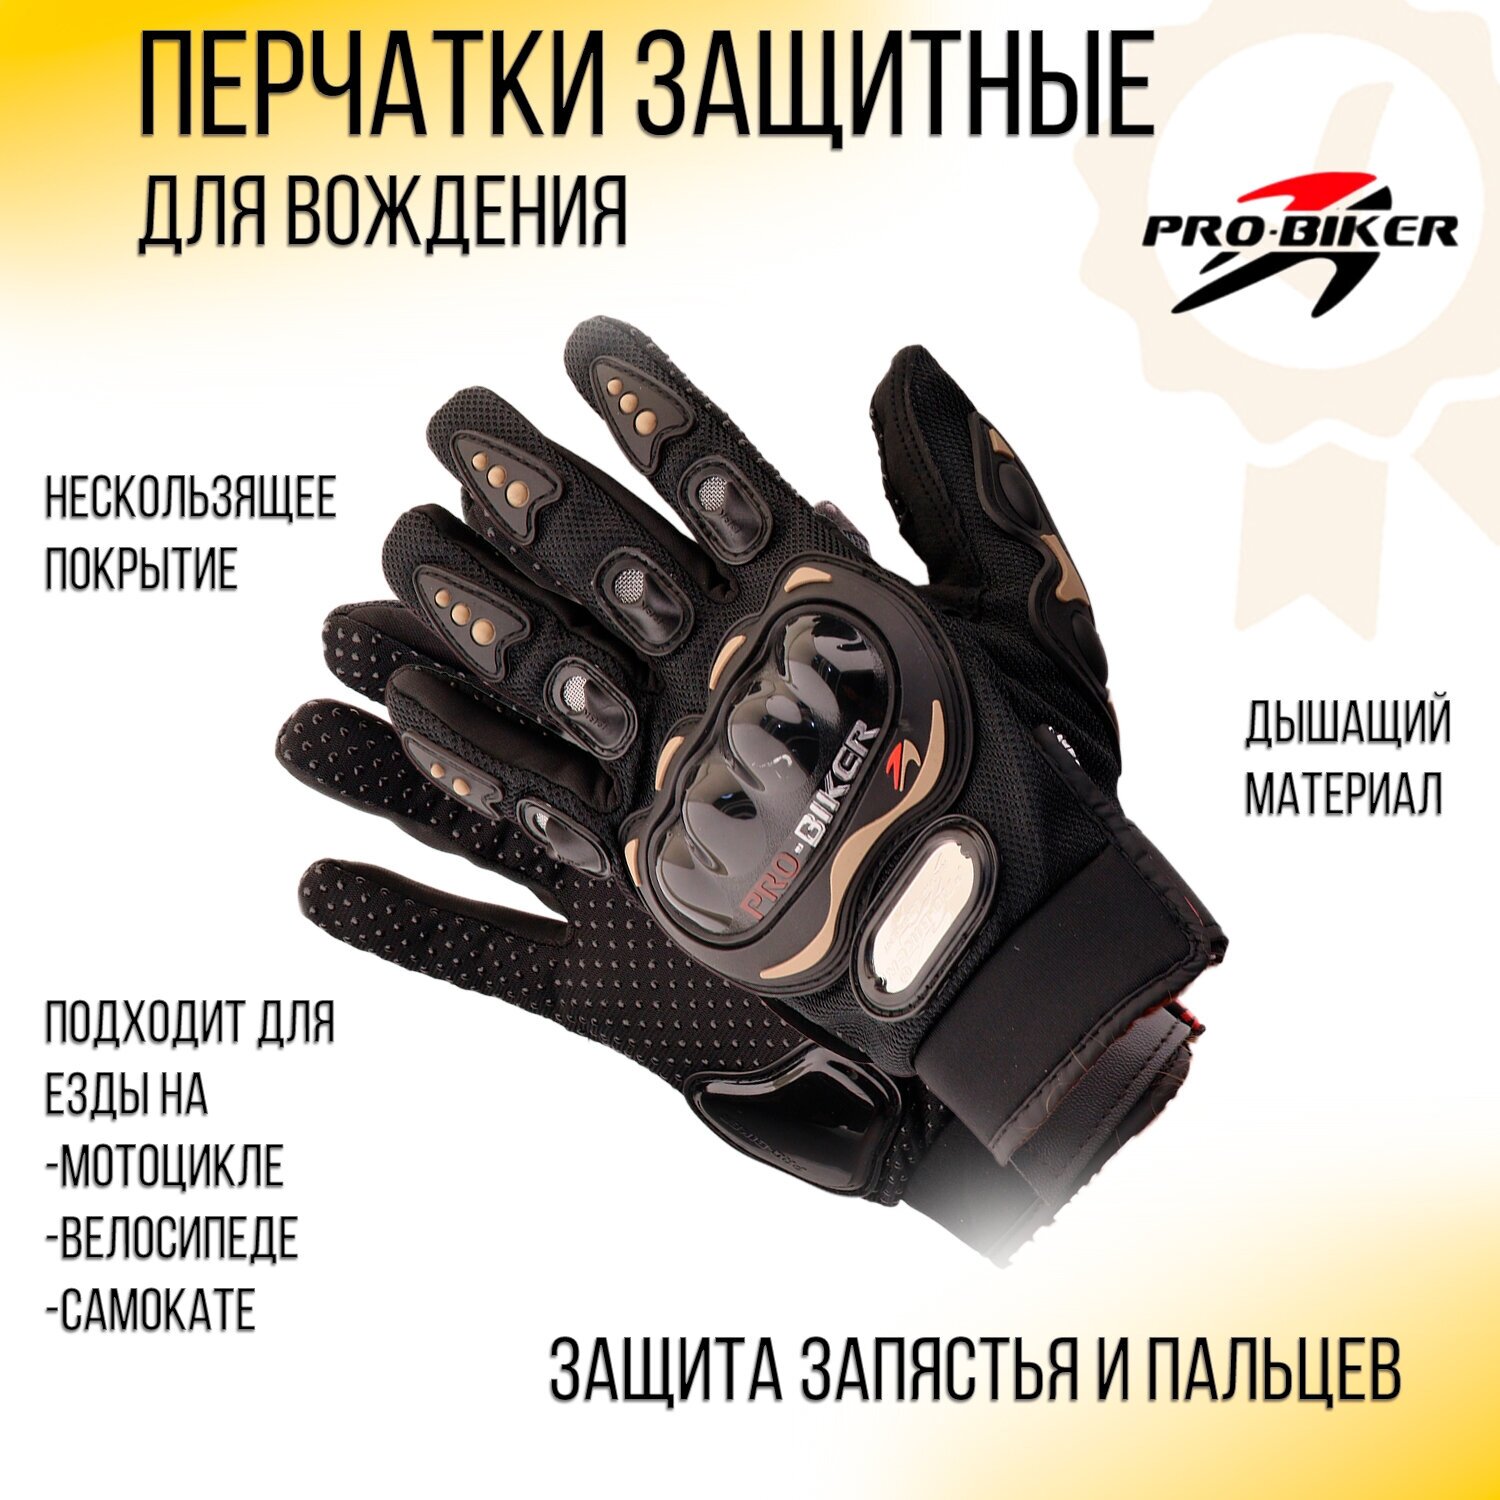 Мото перчатки "PRO-BIKER" (mod: RQ-01 size: XL черные)